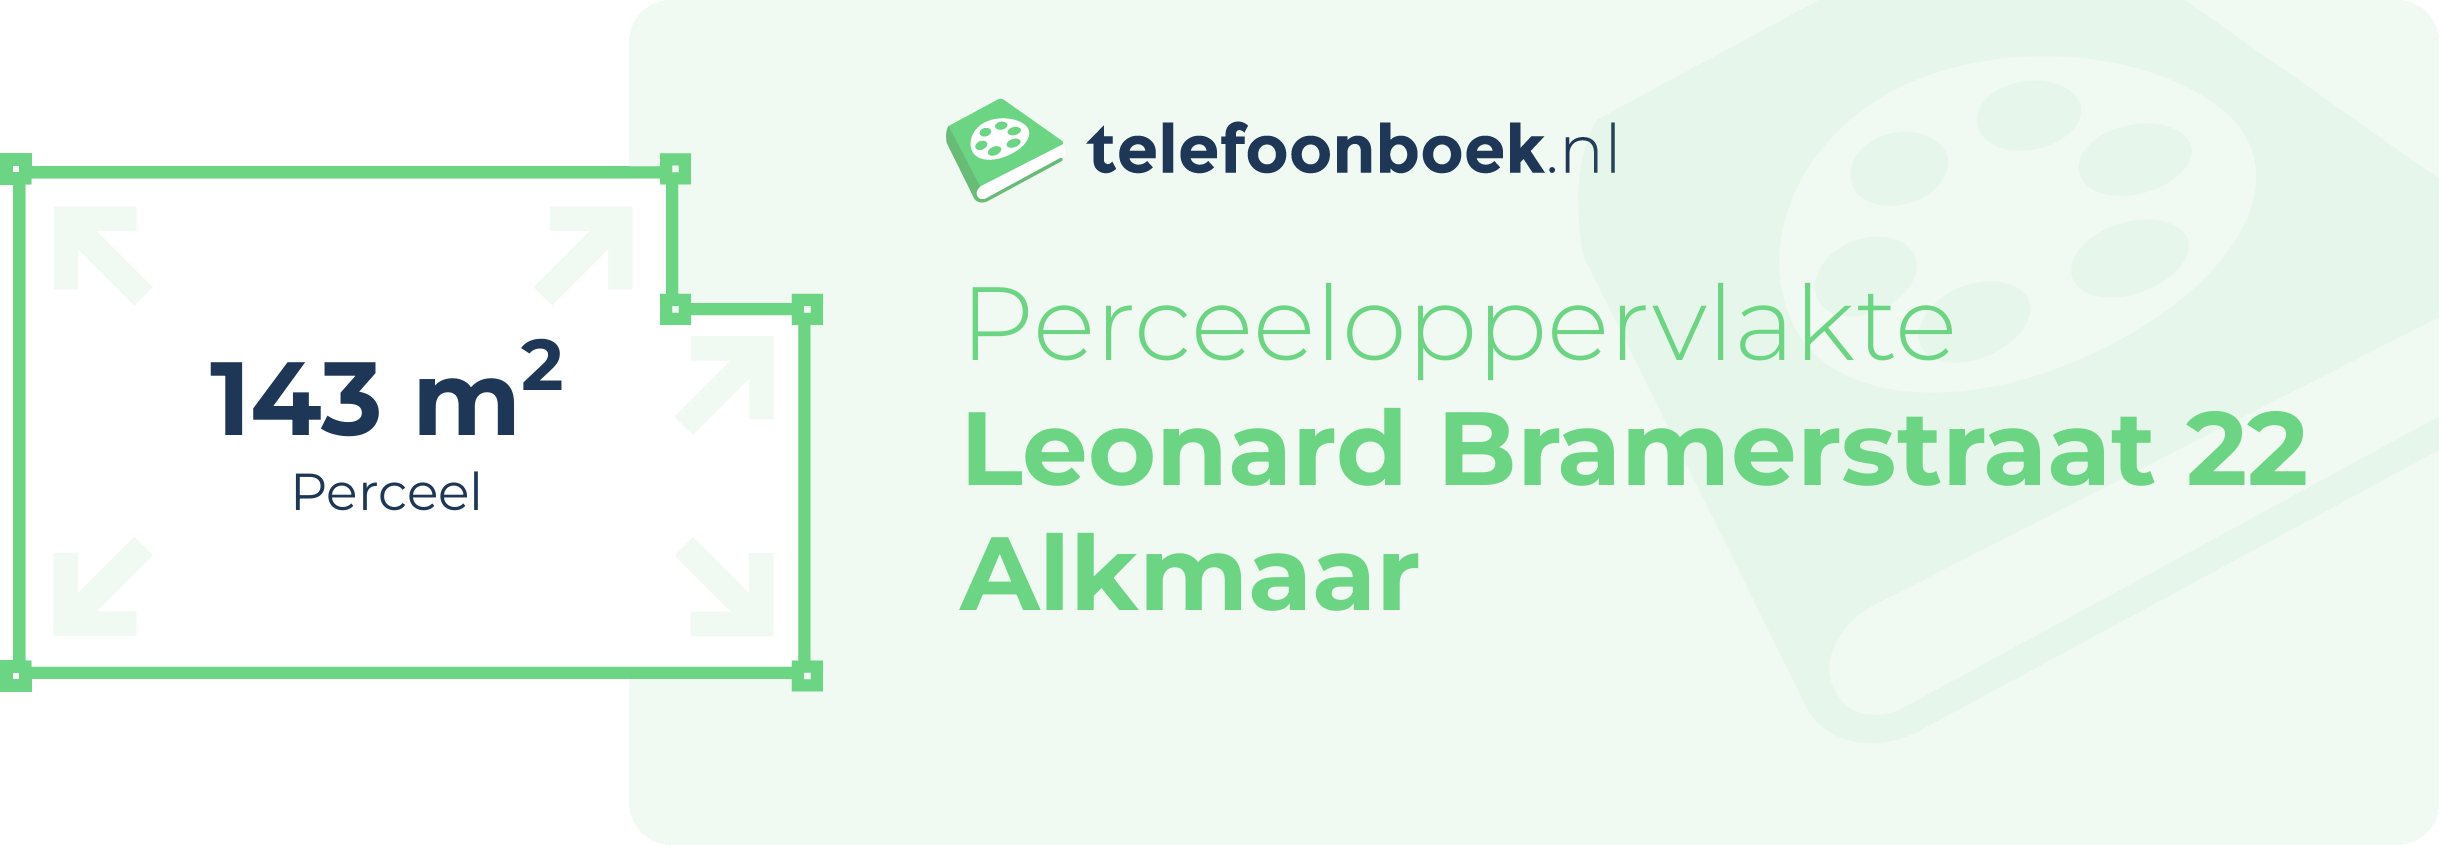 Perceeloppervlakte Leonard Bramerstraat 22 Alkmaar